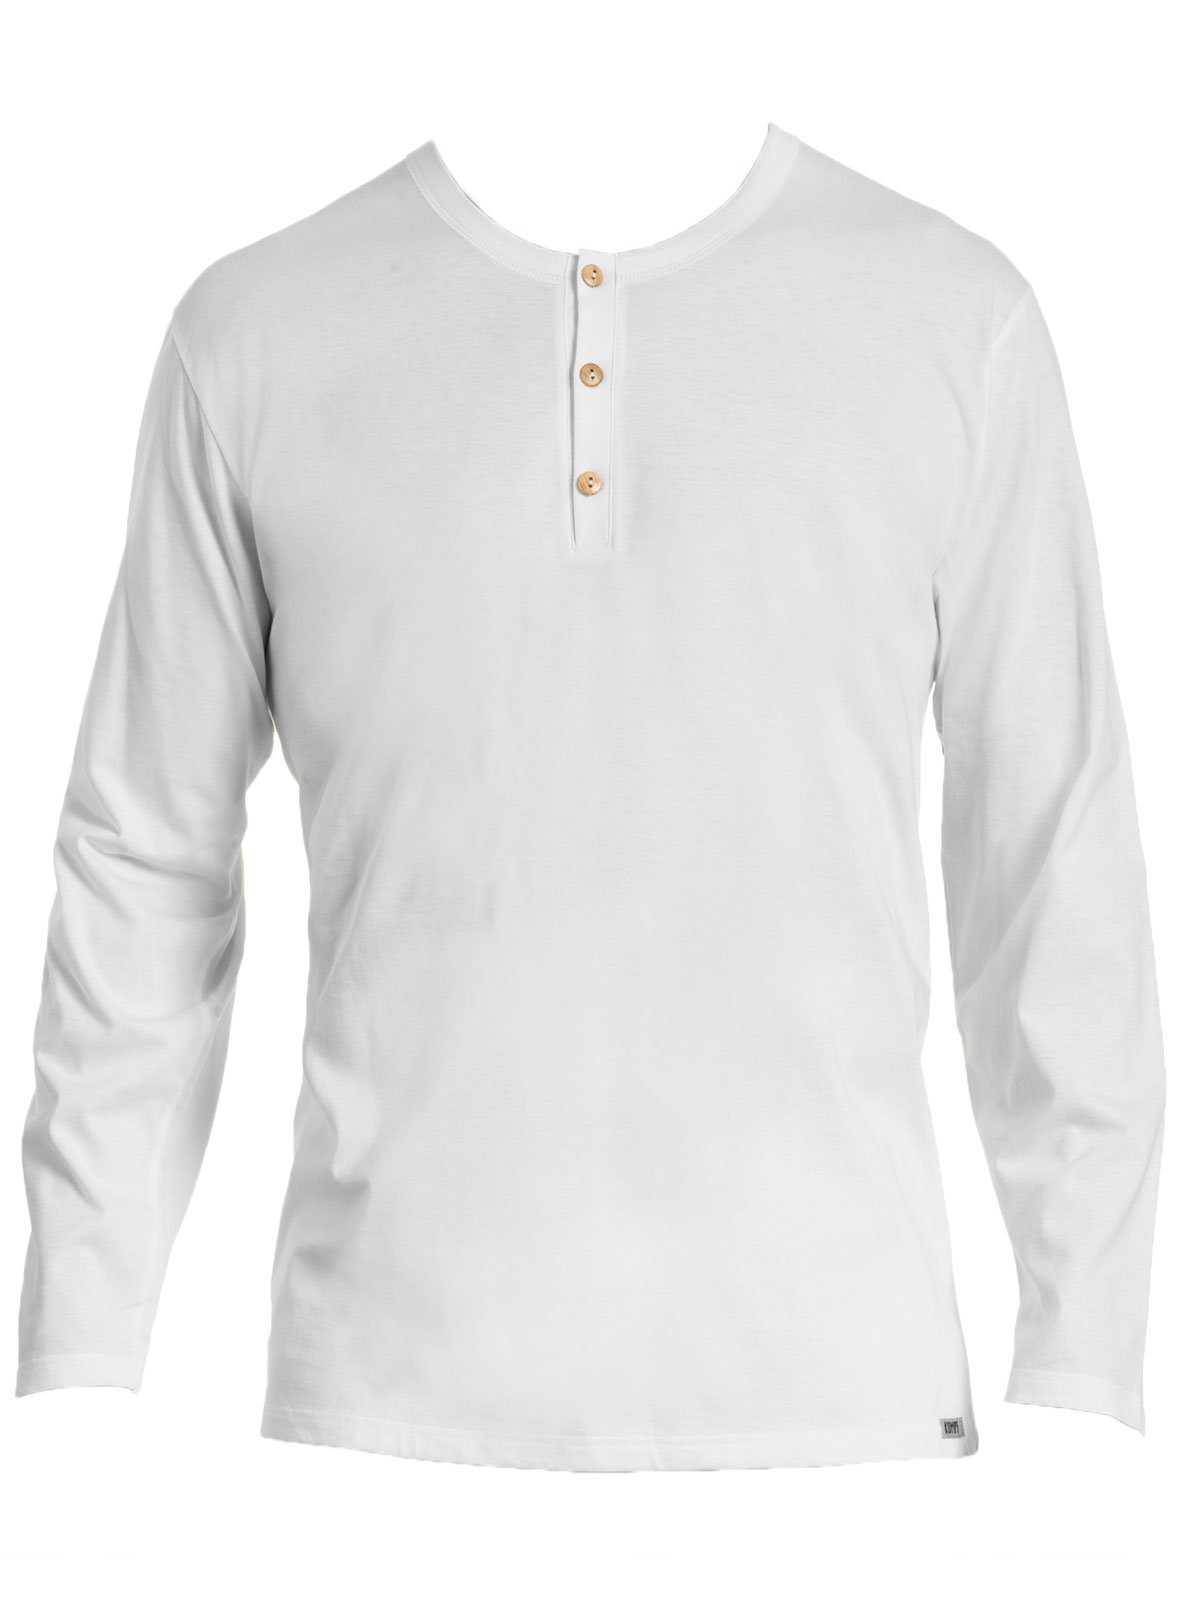 KUMPF Unterziehshirt 2er hohe Shirt stahlgrau-melange (Spar-Set, Markenqualität langarm Sparpack Herren Cotton 2-St) weiss Bio